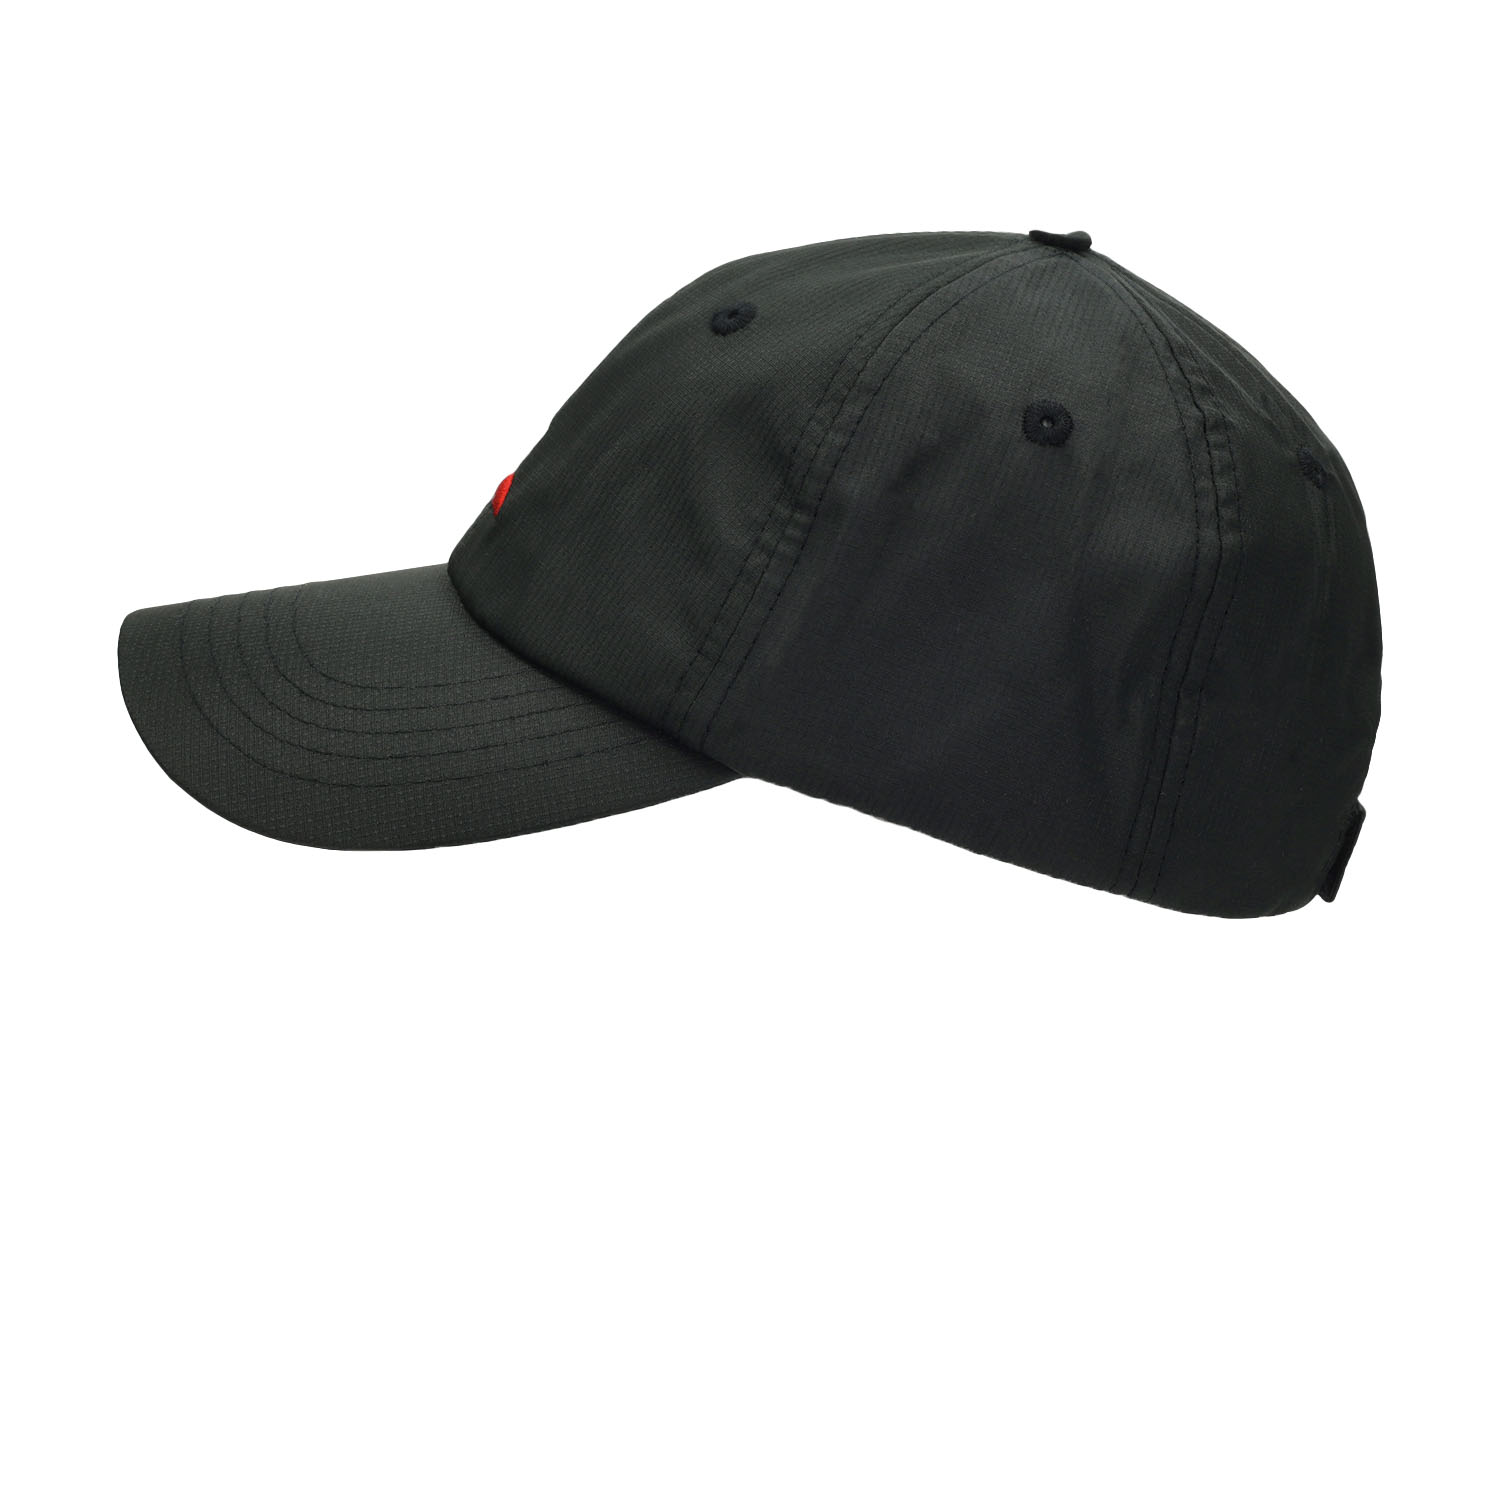 Le Coq Sportif Pro Men's Tennis Cap - Black